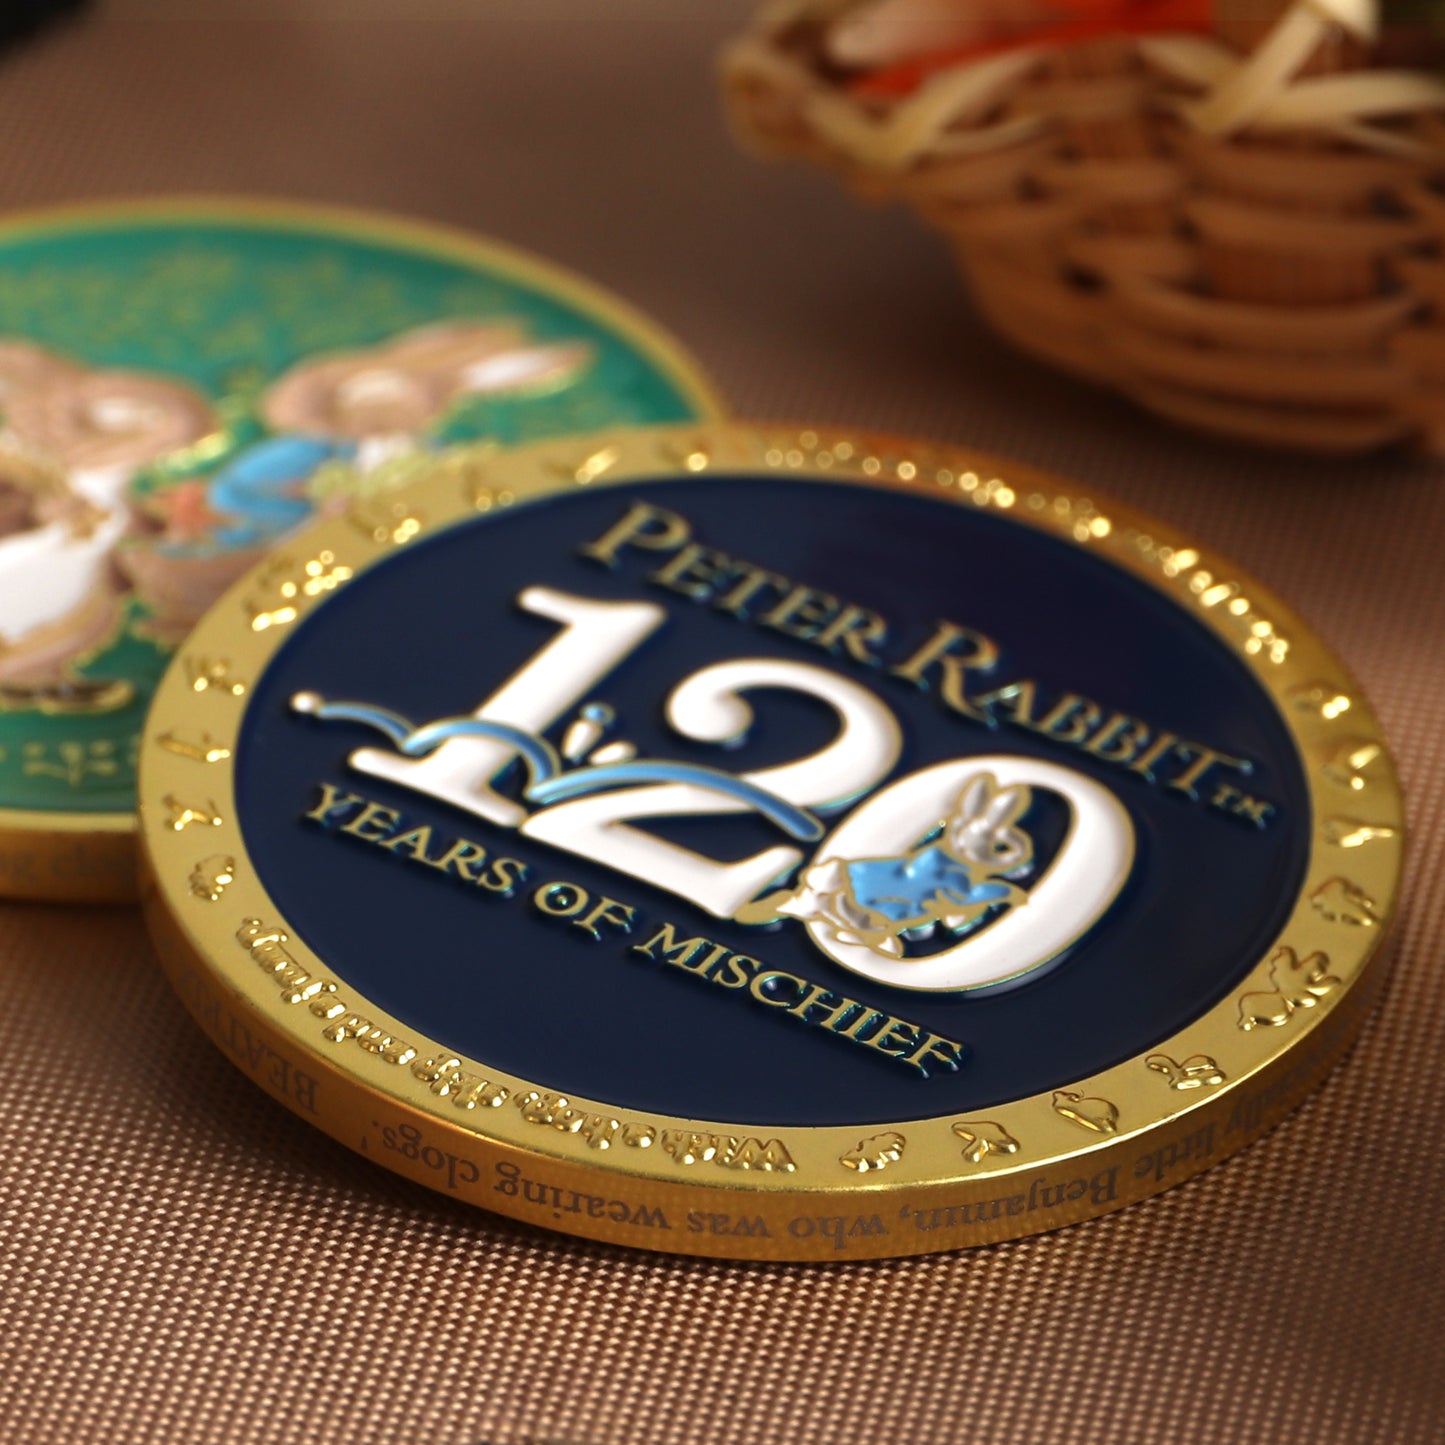 Peter Rabbit 120 Years Commemorative Coin - Beatrix Potter